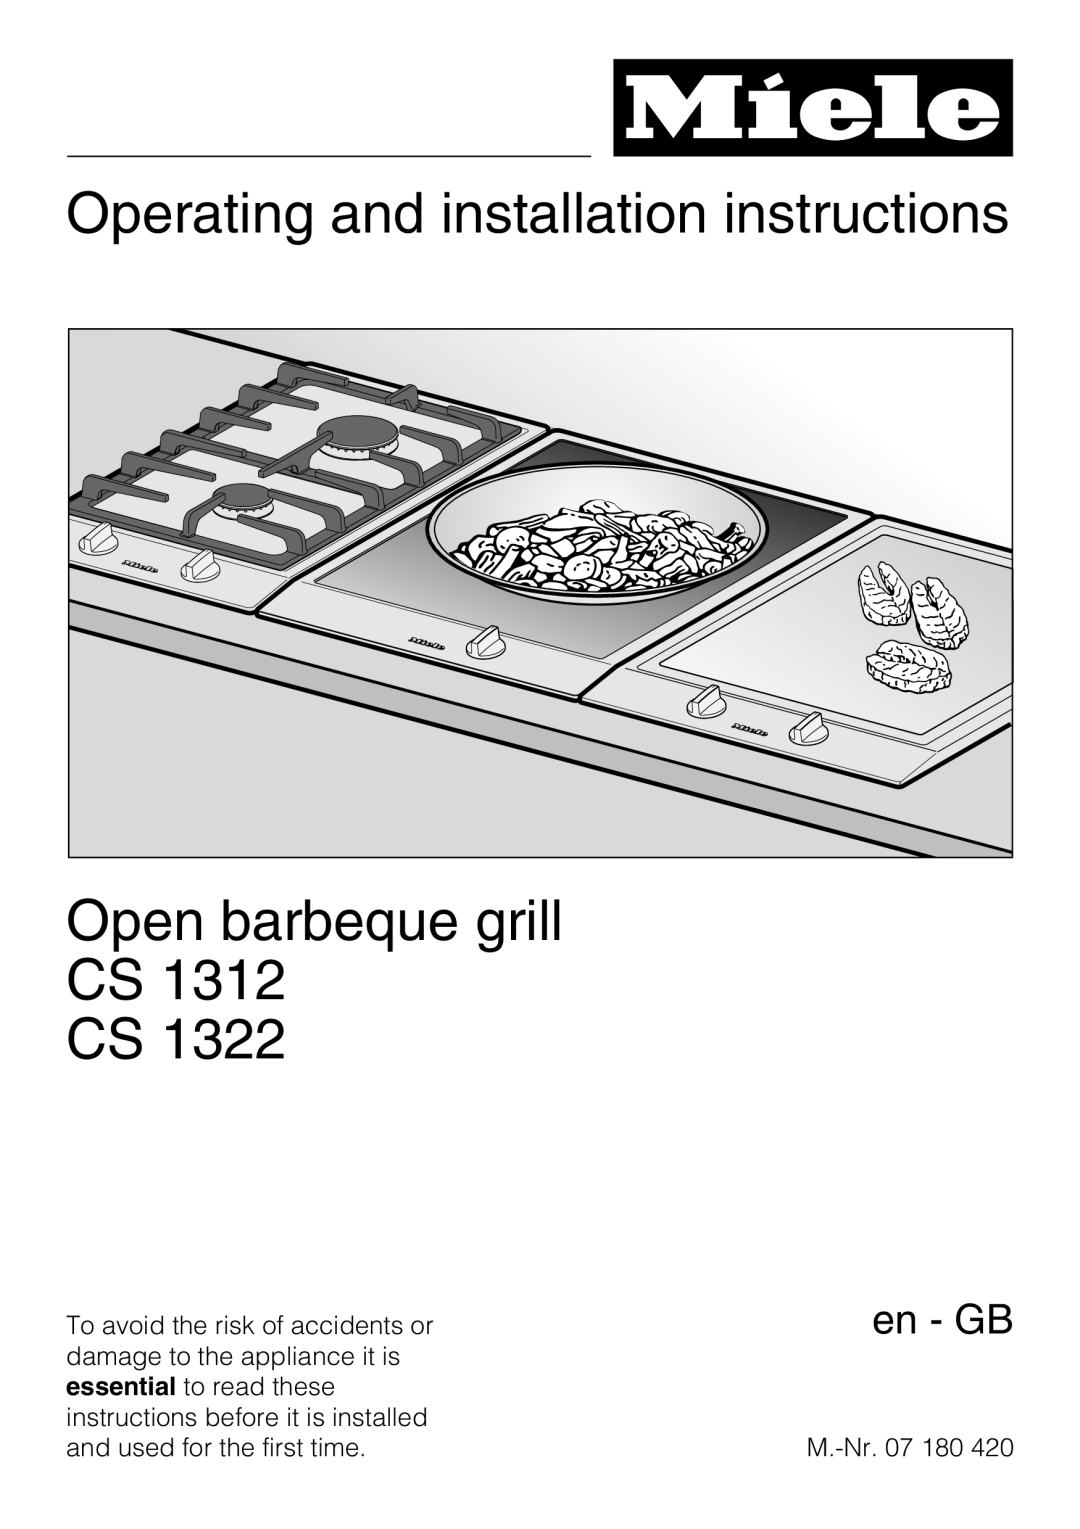 Miele CS1312, CS1322 installation instructions Operating and installation instructions, Open barbeque grill CS CS, en - GB 